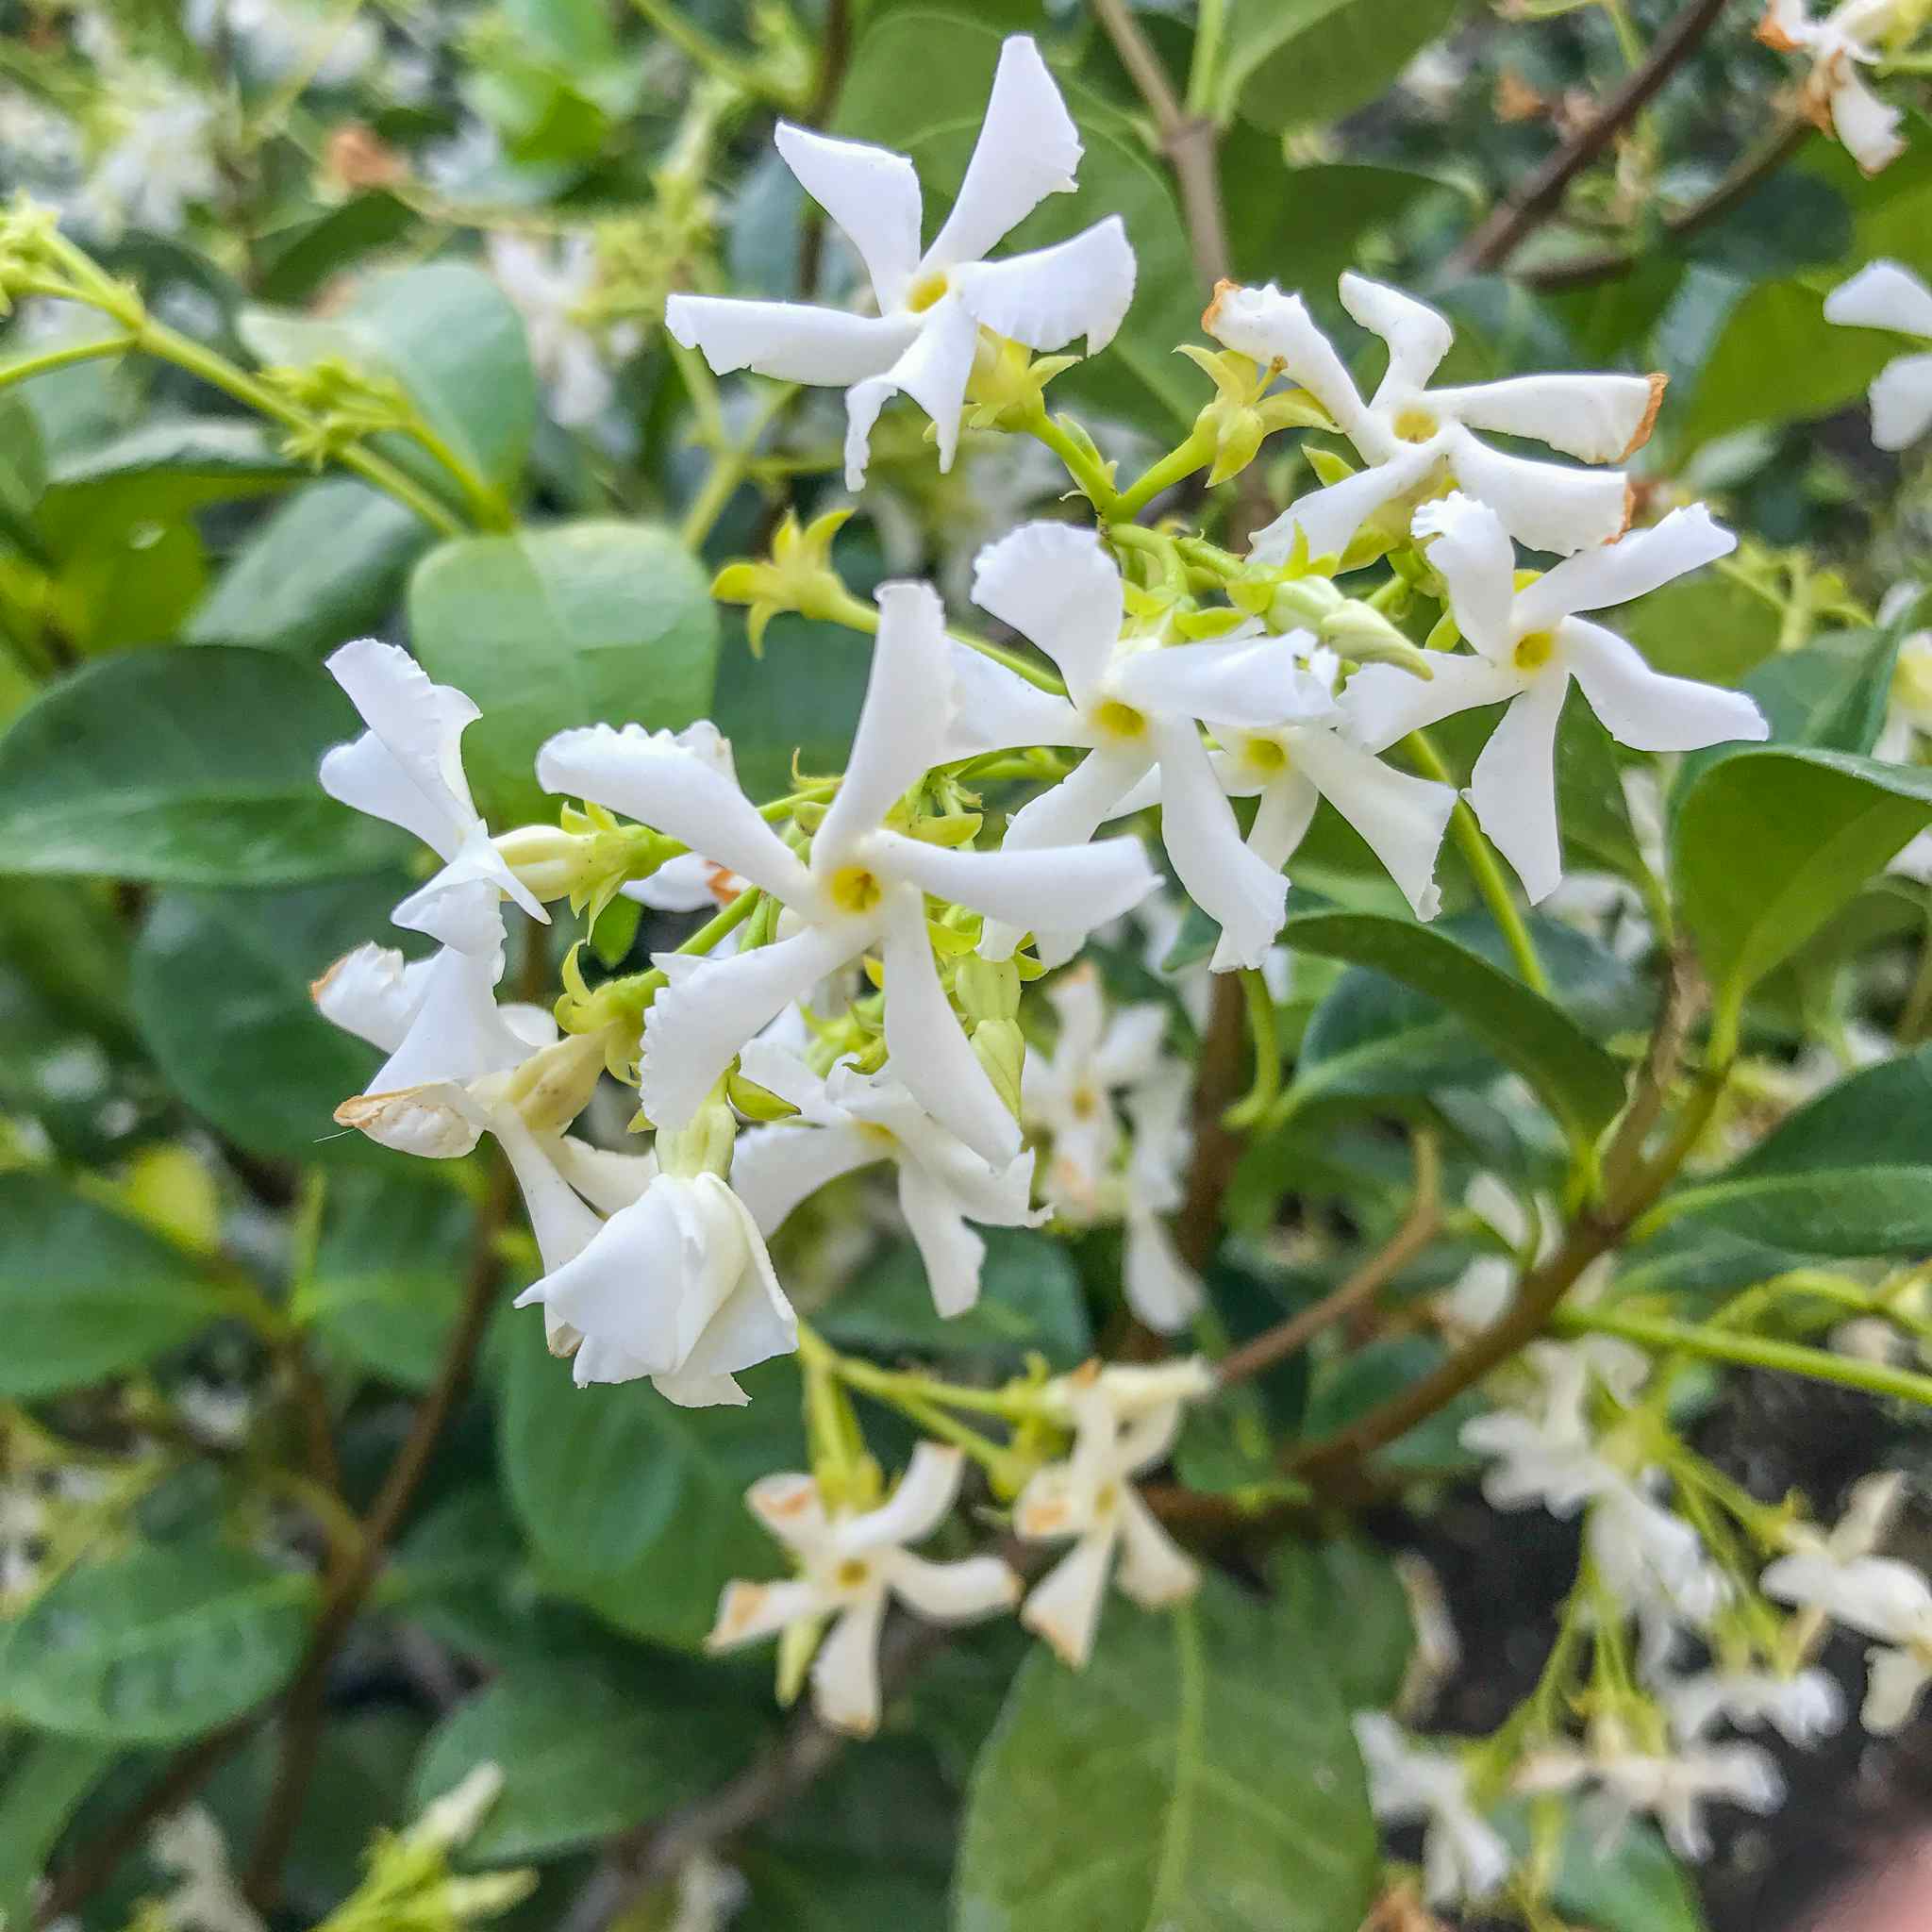 Star Jasmine flowers